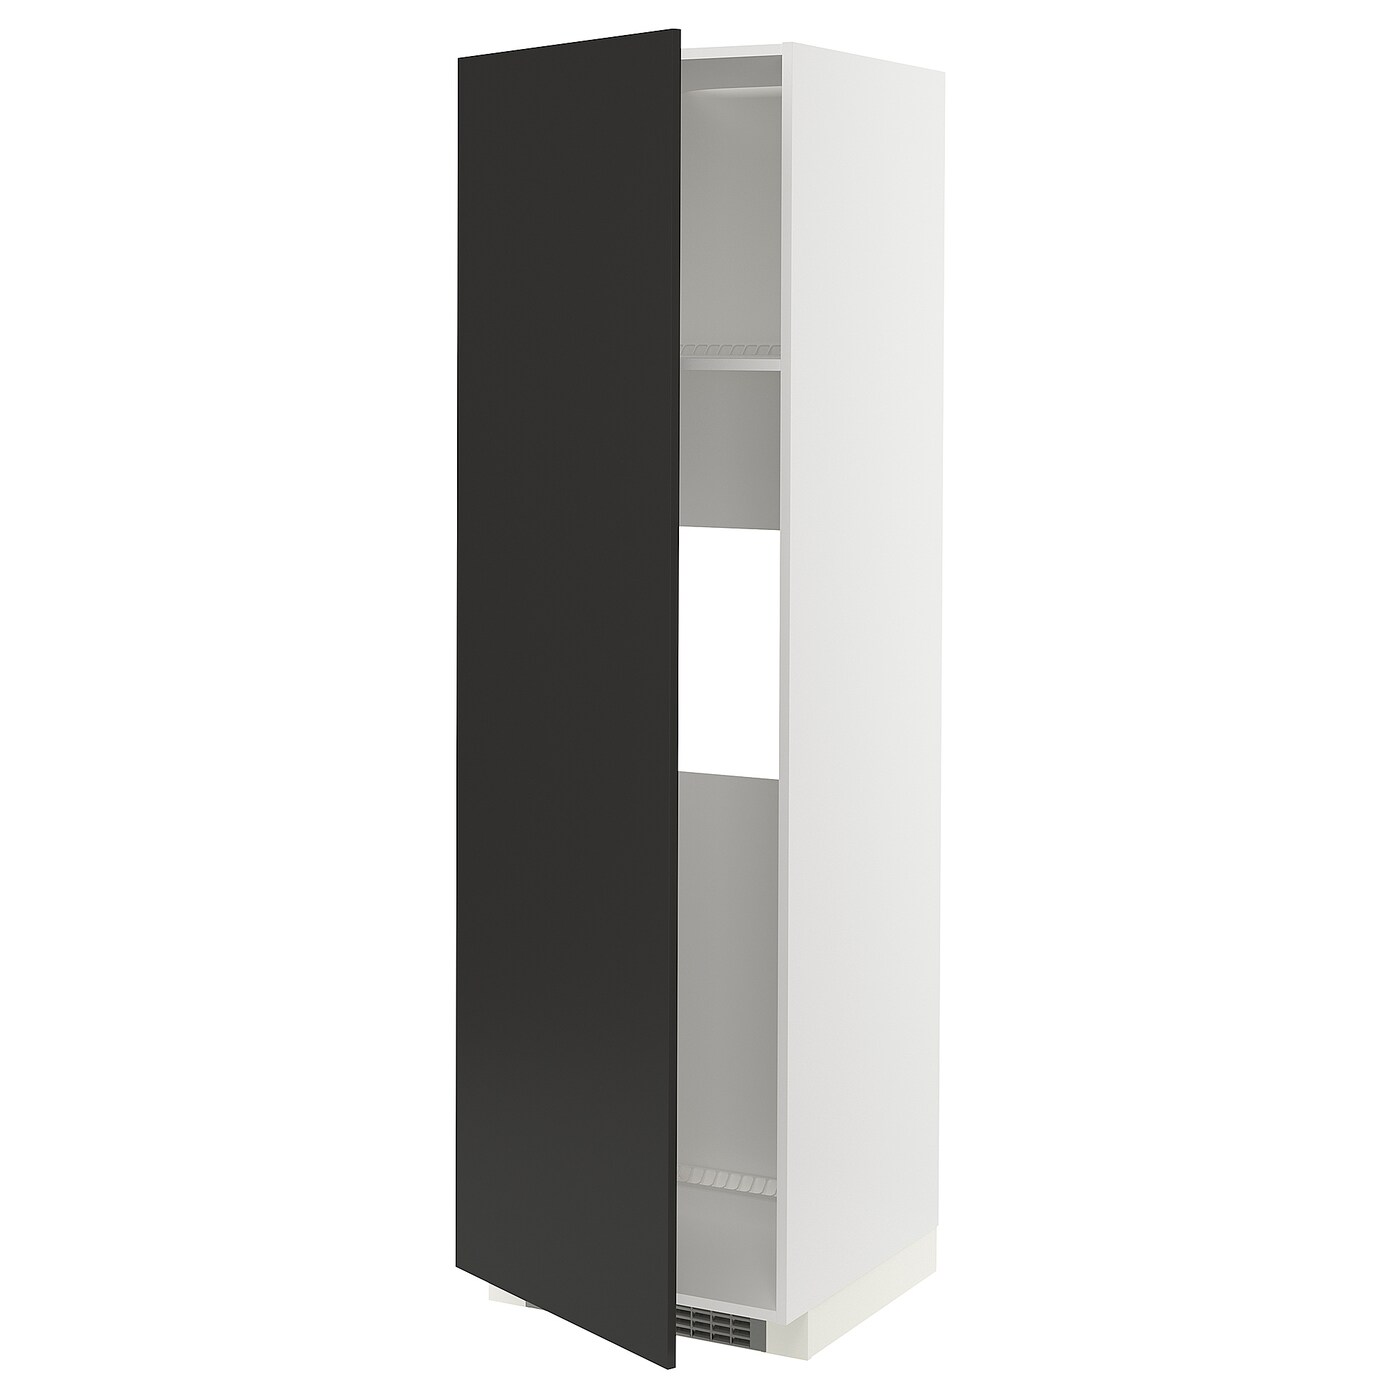 Высокий кухонный шкаф - IKEA METOD/МЕТОД ИКЕА, 200х60х60 см, белый/черный